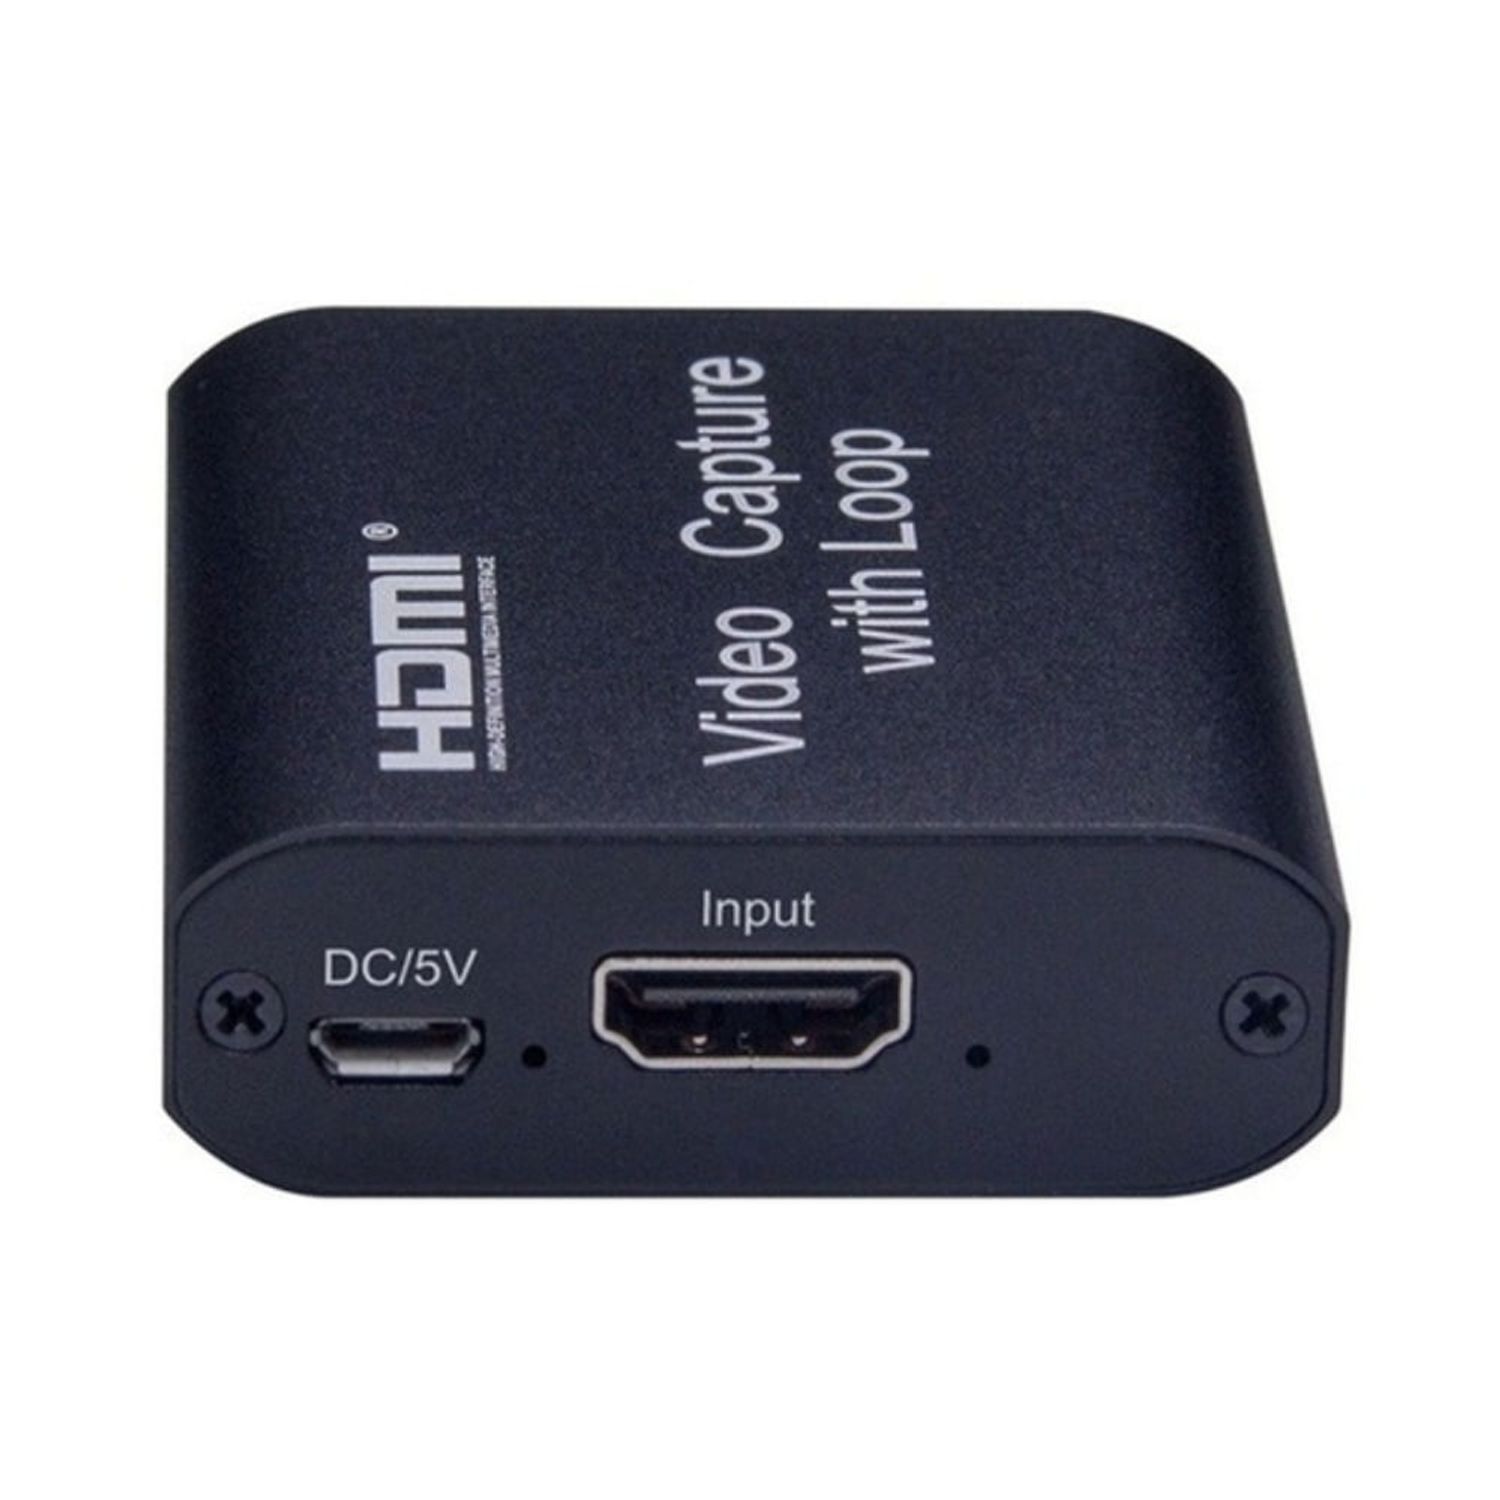 Capturadora de Video USB 2.0 HDMI 